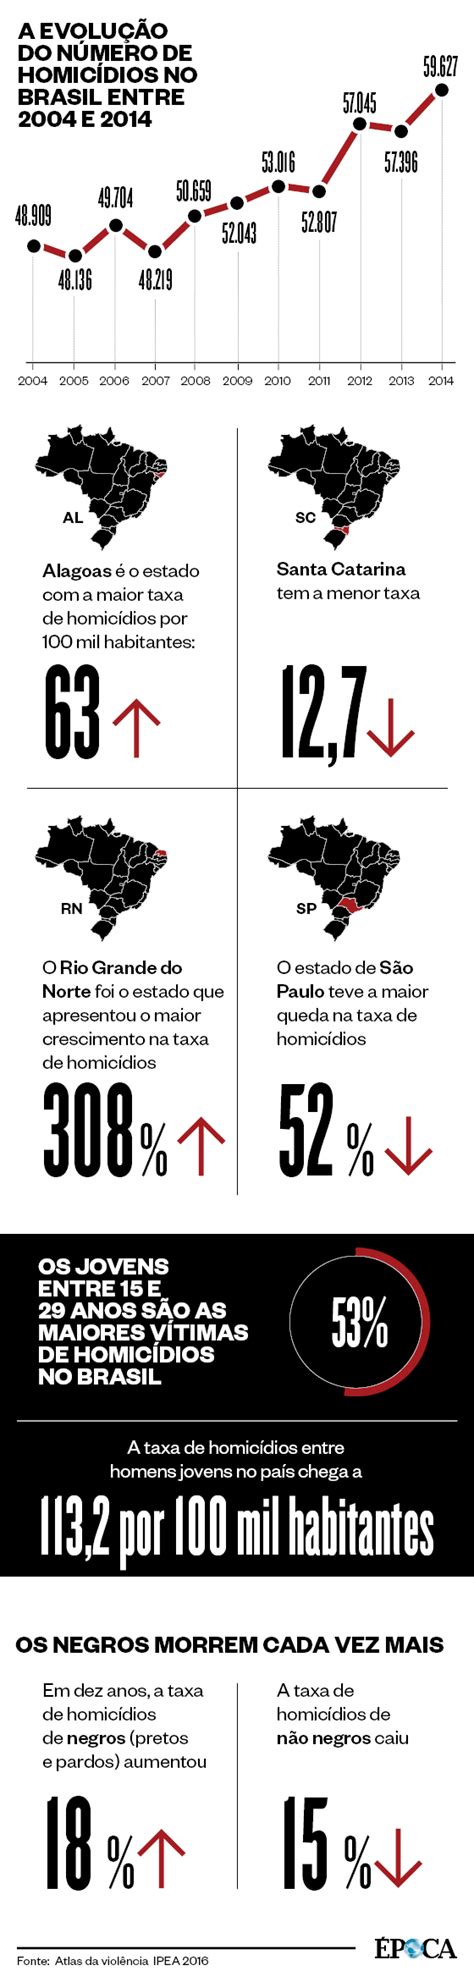 brasil bate recorde no número de homicídios segundo ipea Época tempo